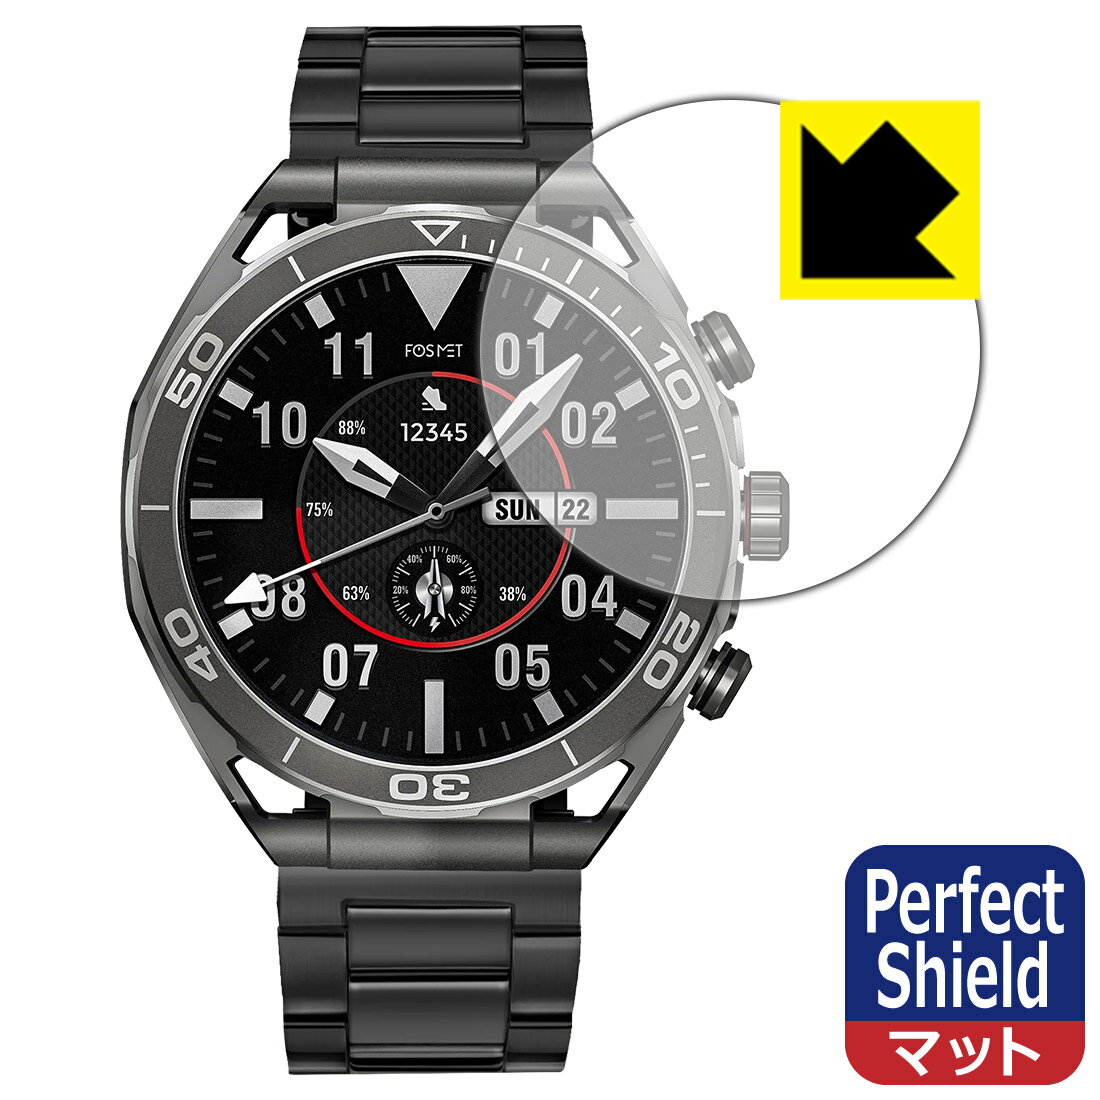 Perfect Shield【反射低減】保護フィルム FOSMET スマートウォッチ LSW6 日本製 自社製造直販